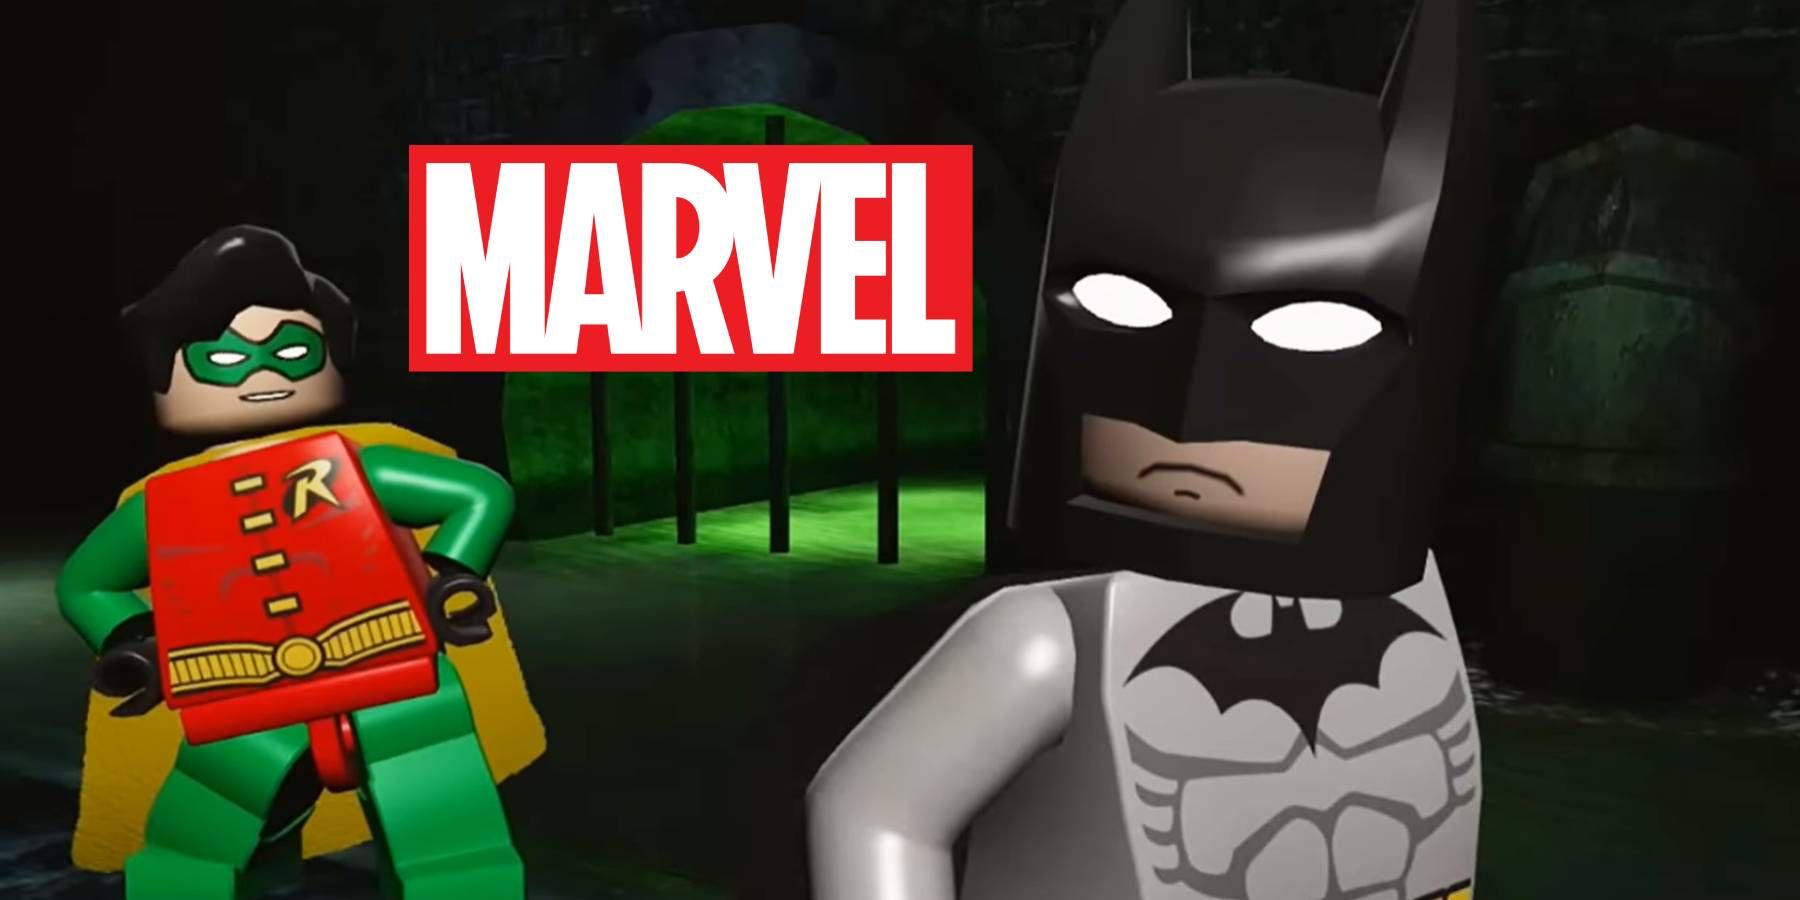 Batman and Robin from LEGO Batman looking at the Marvel logo